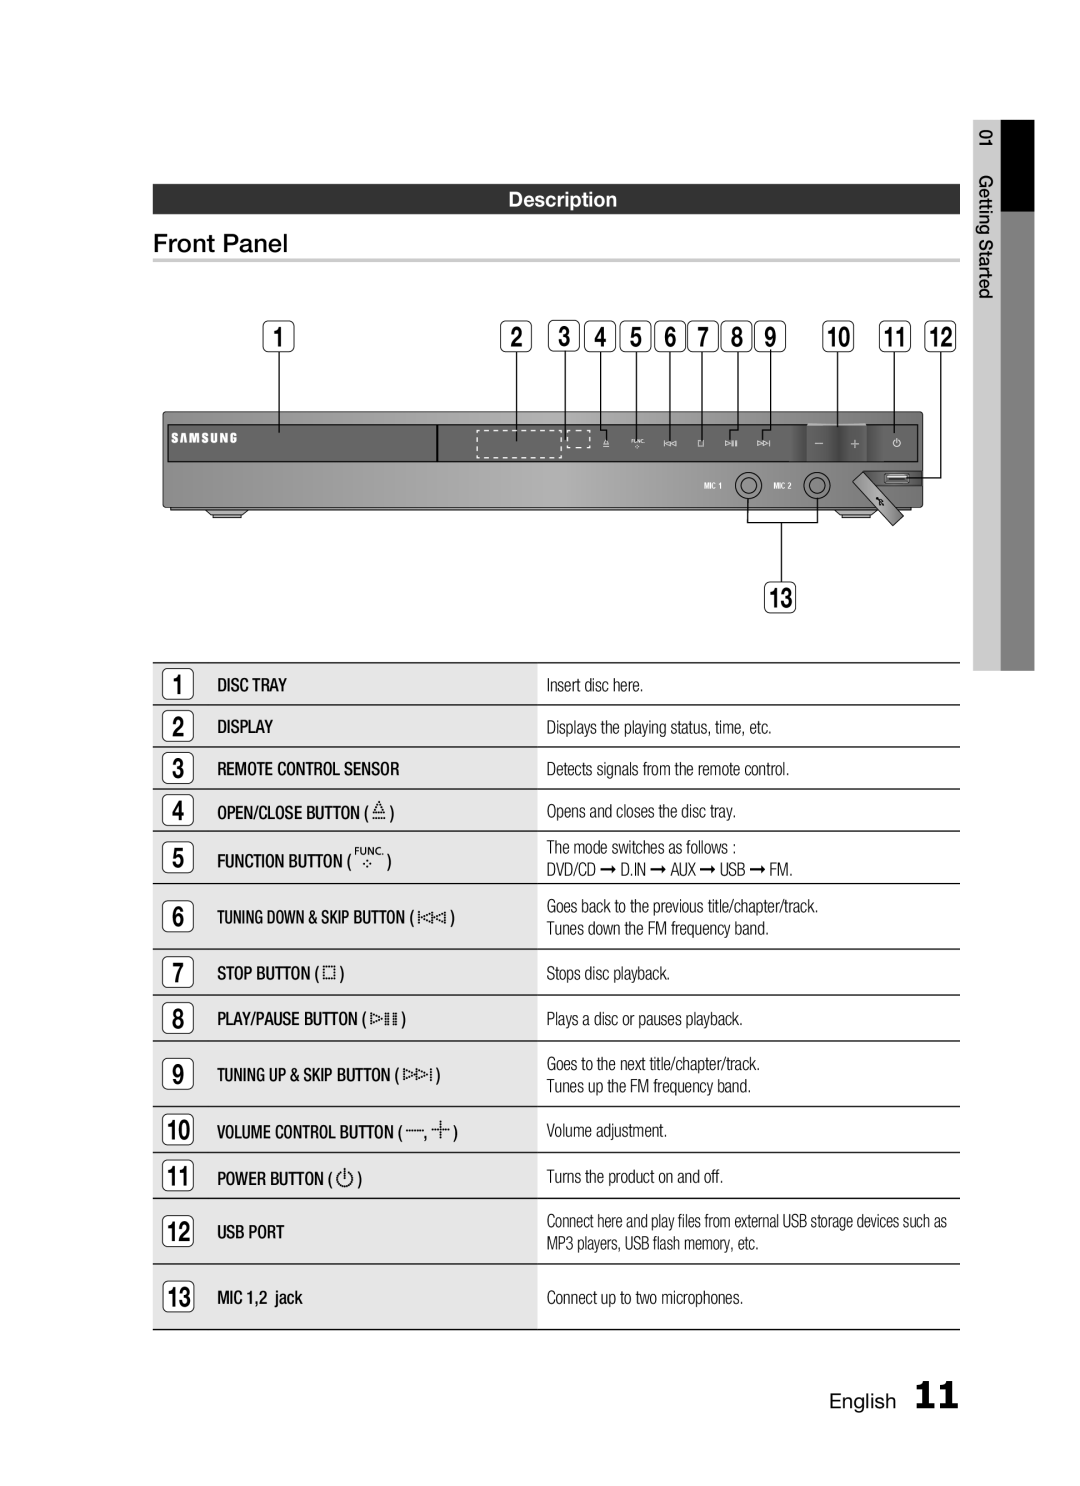 Samsung HT-C453N/MEA, HT-C455N/MEA, HT-C445N/MEA, HT-C455N/HAC, HT-C455N/UMG manual Front Panel, DescriptionGetting, English 